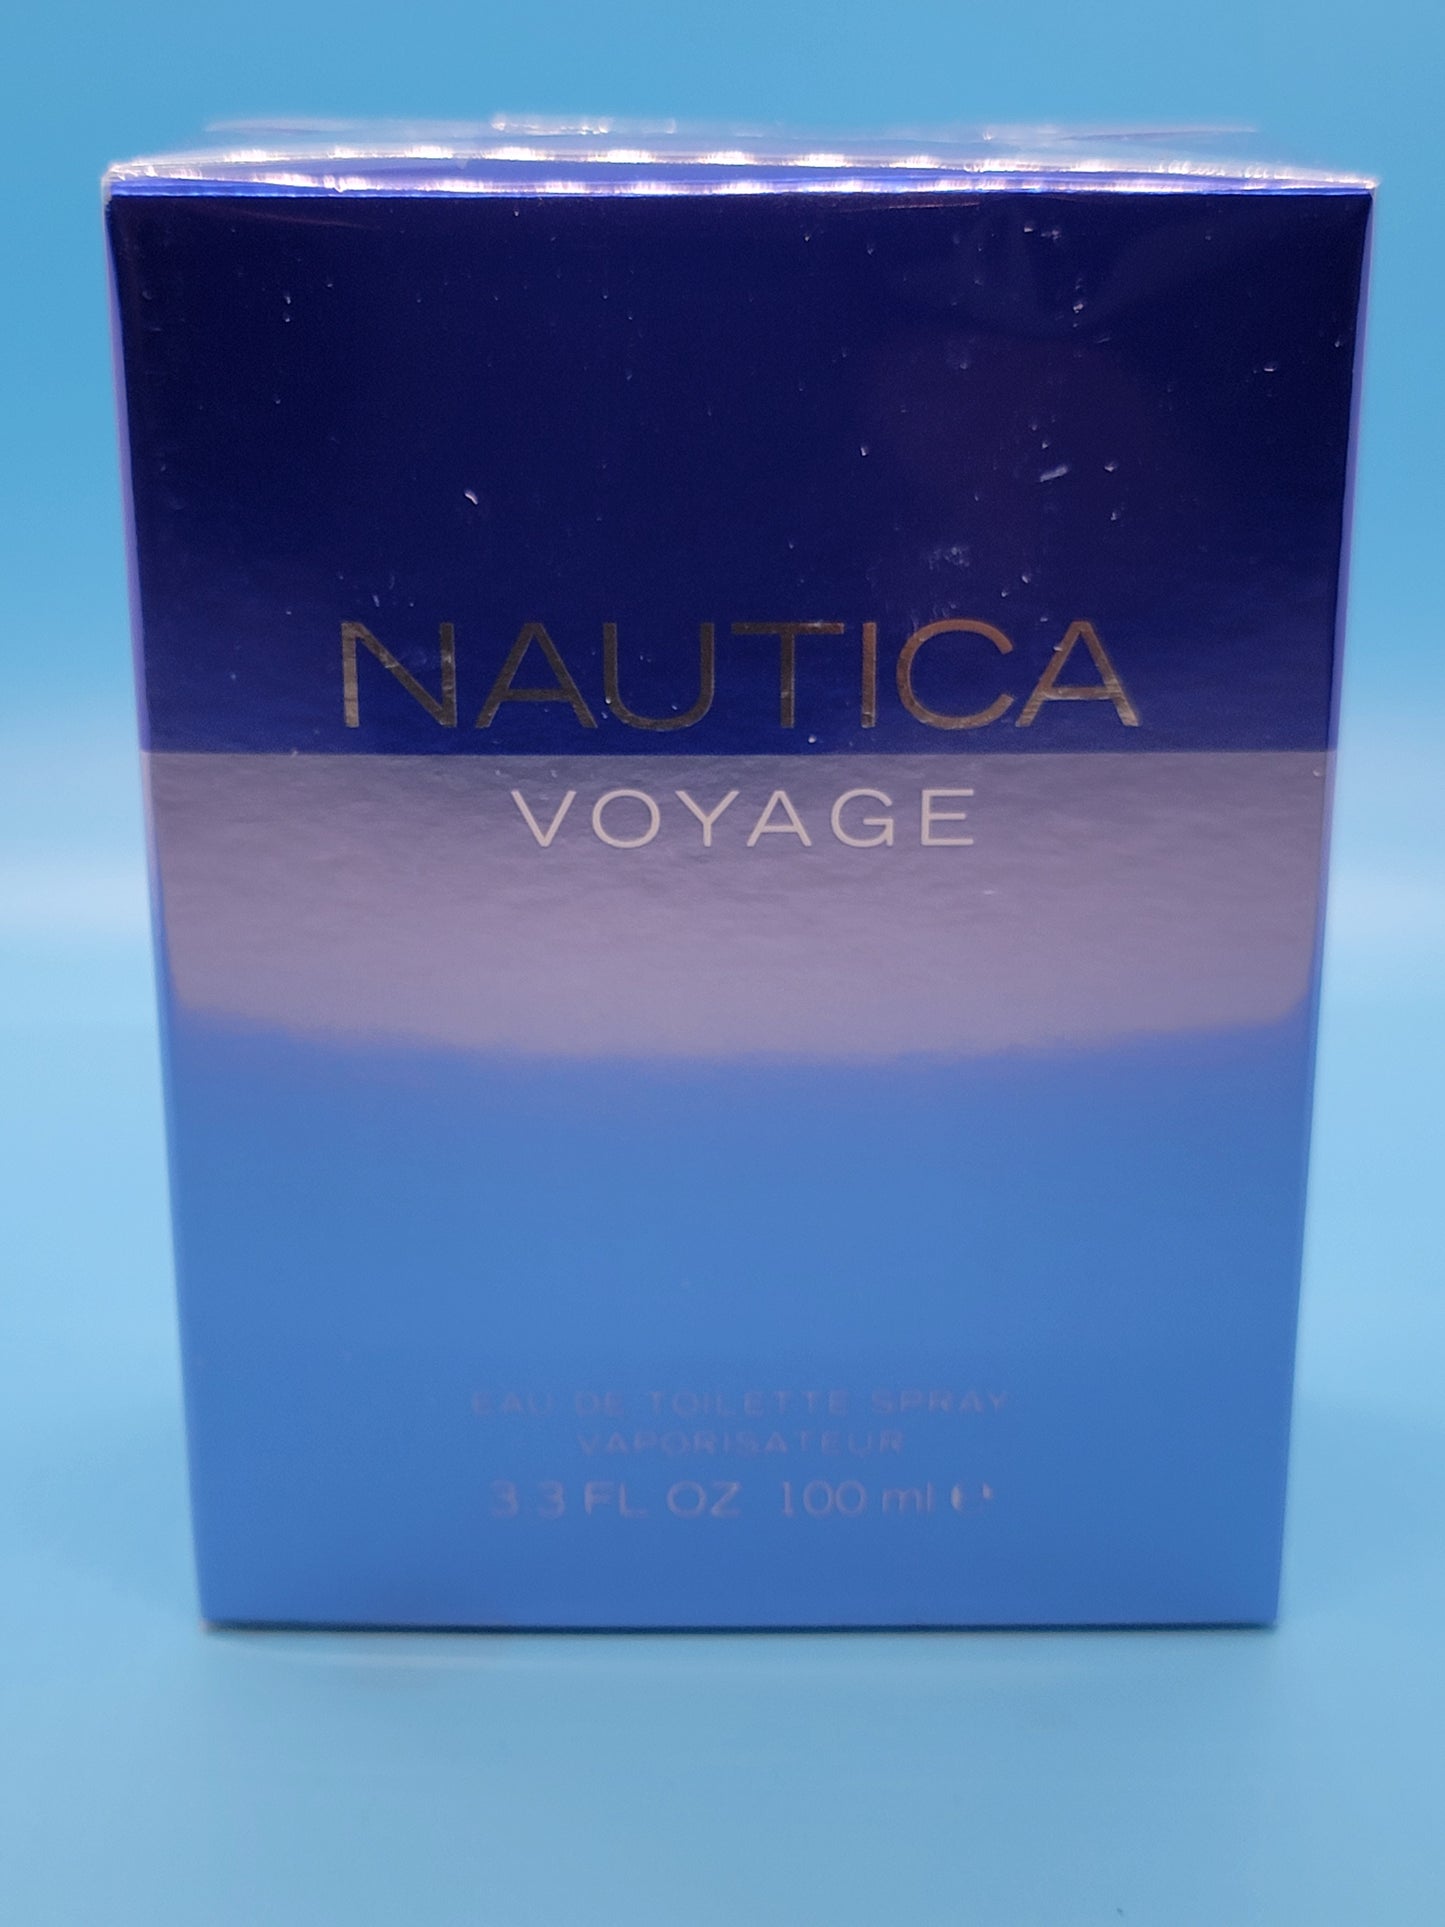 Nautica Voyage